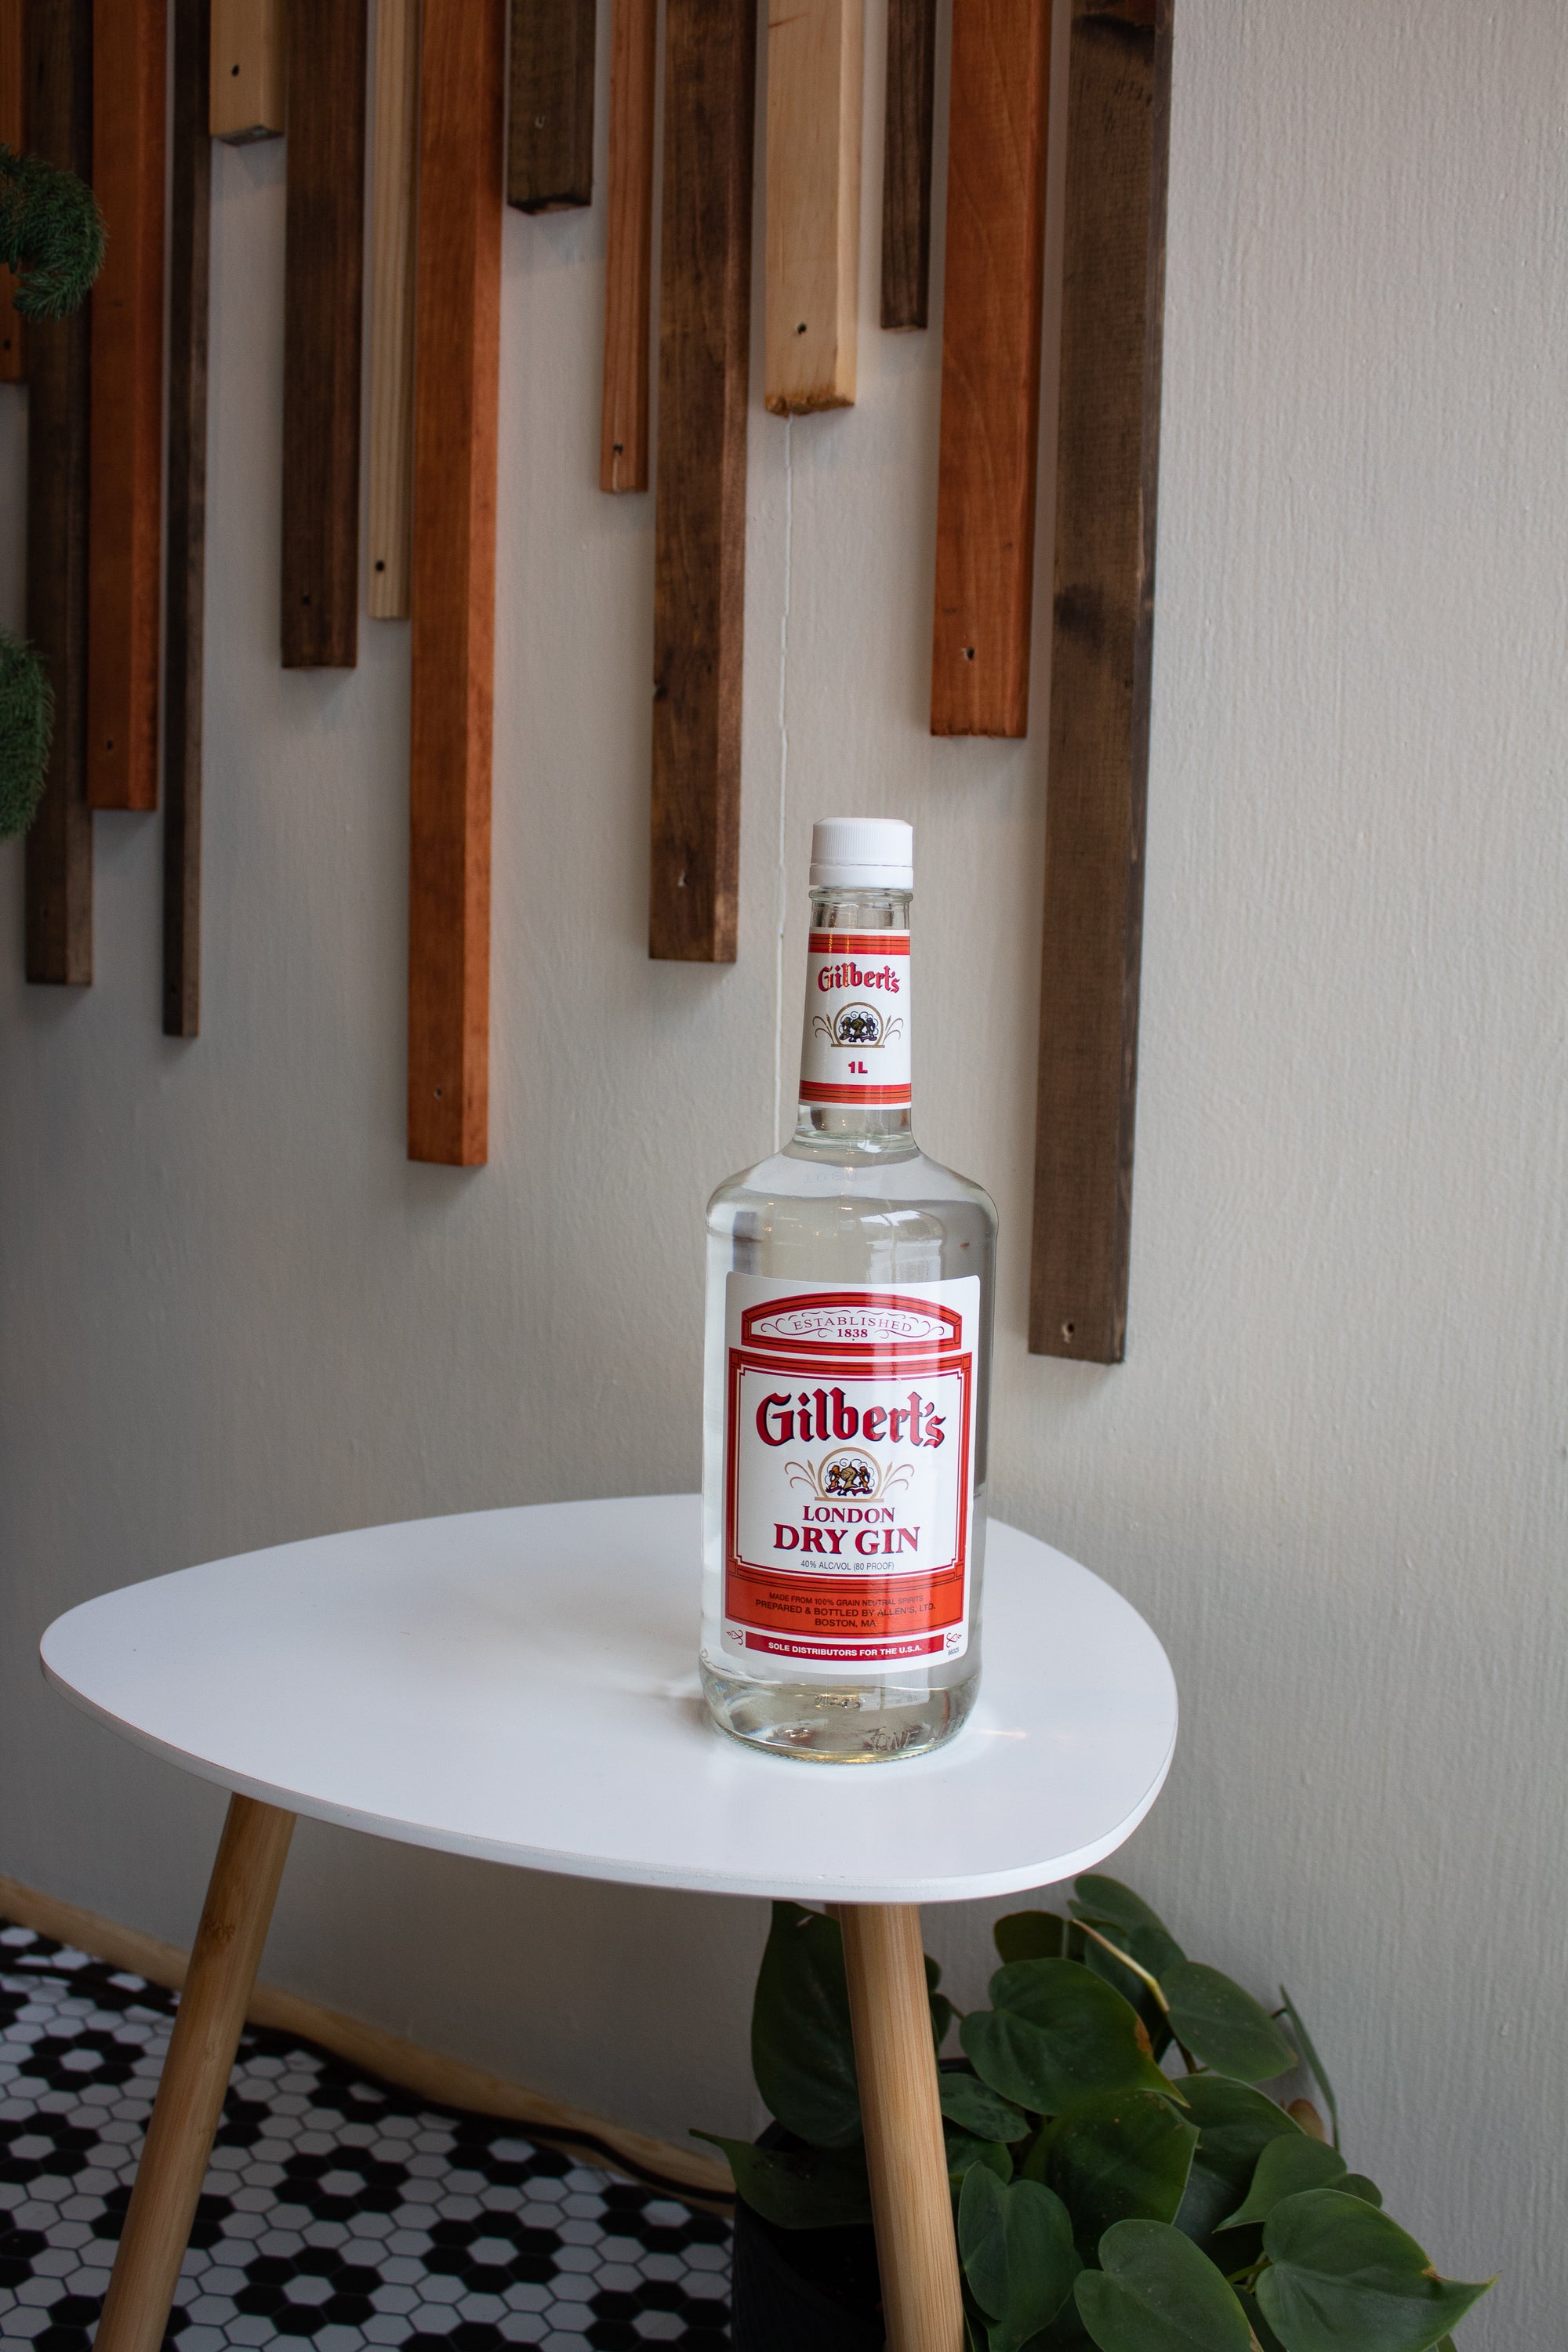 Gilbert's Gin